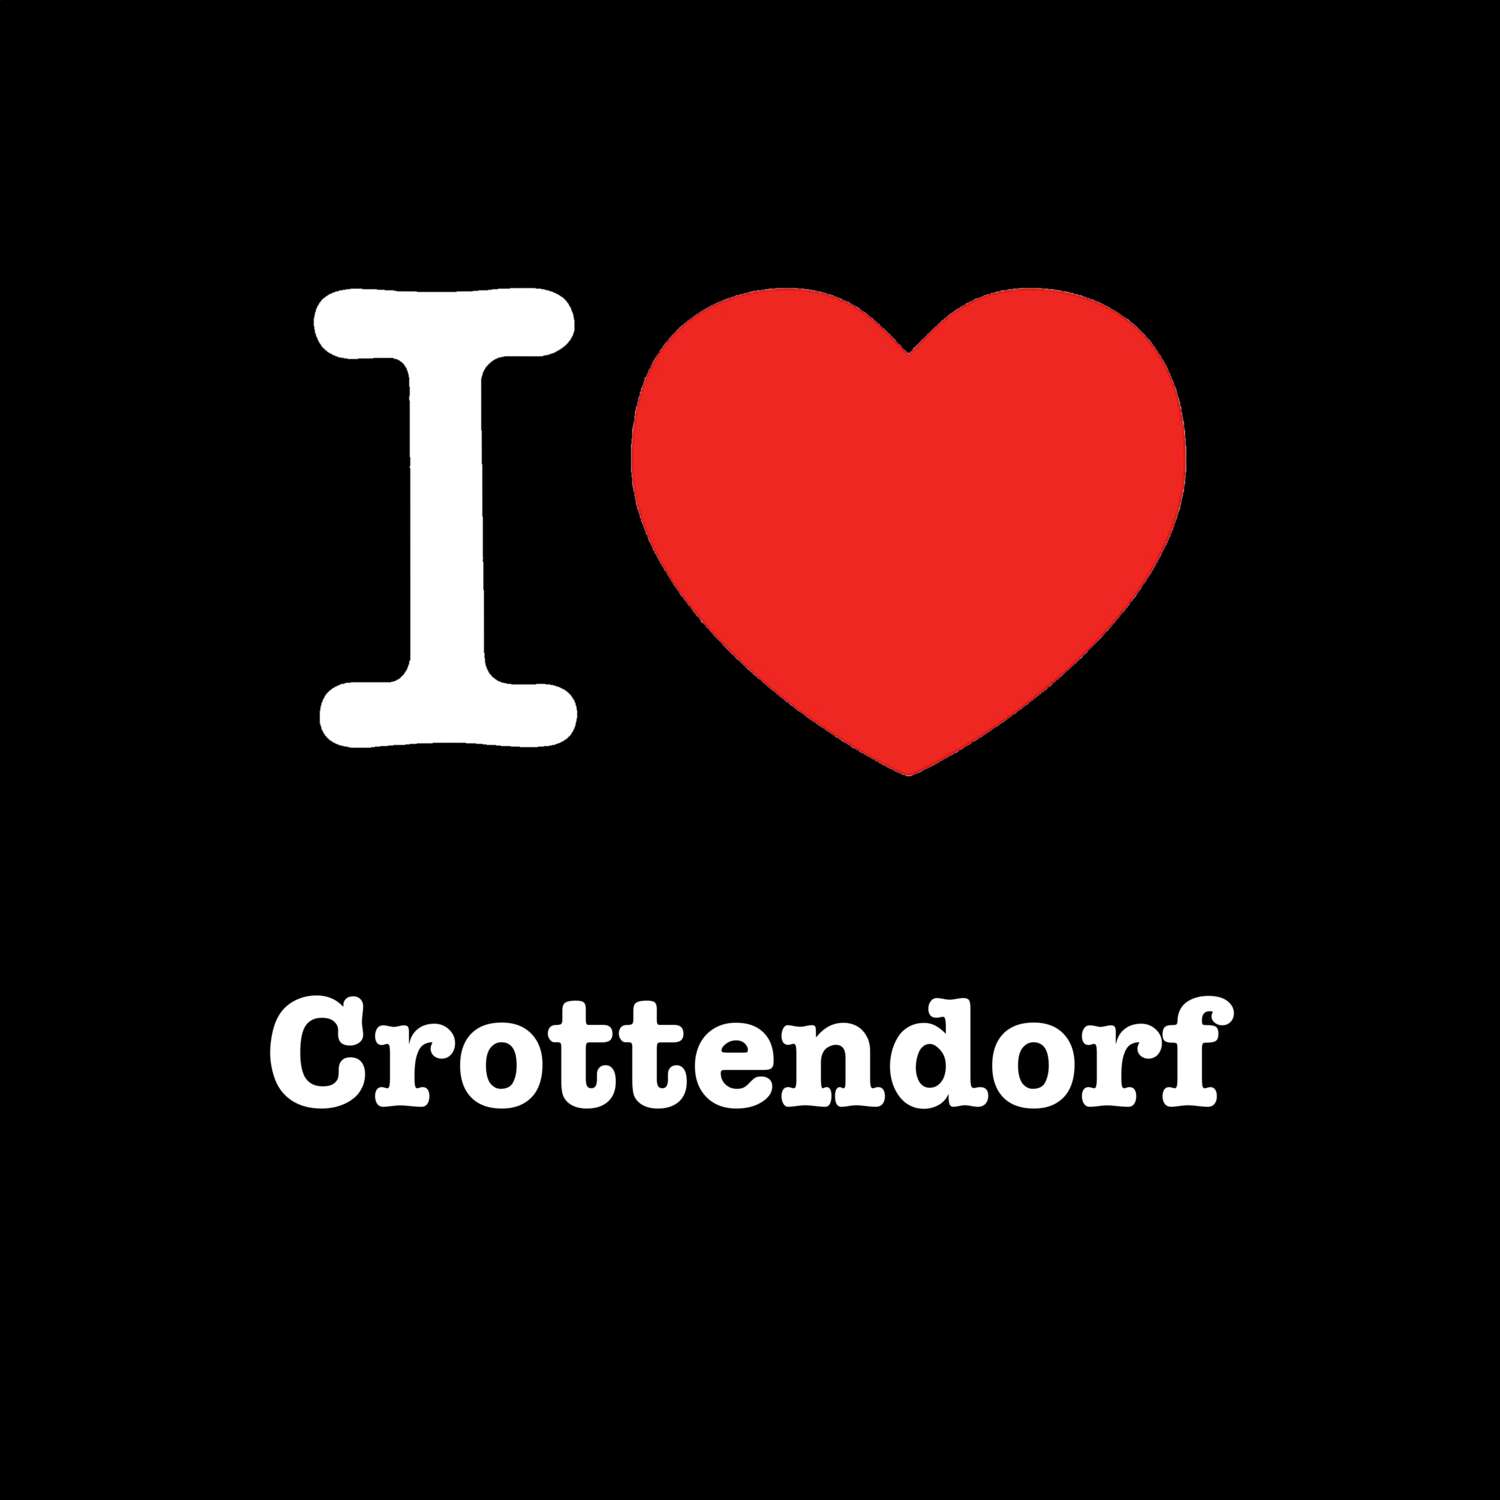 Crottendorf T-Shirt »I love«